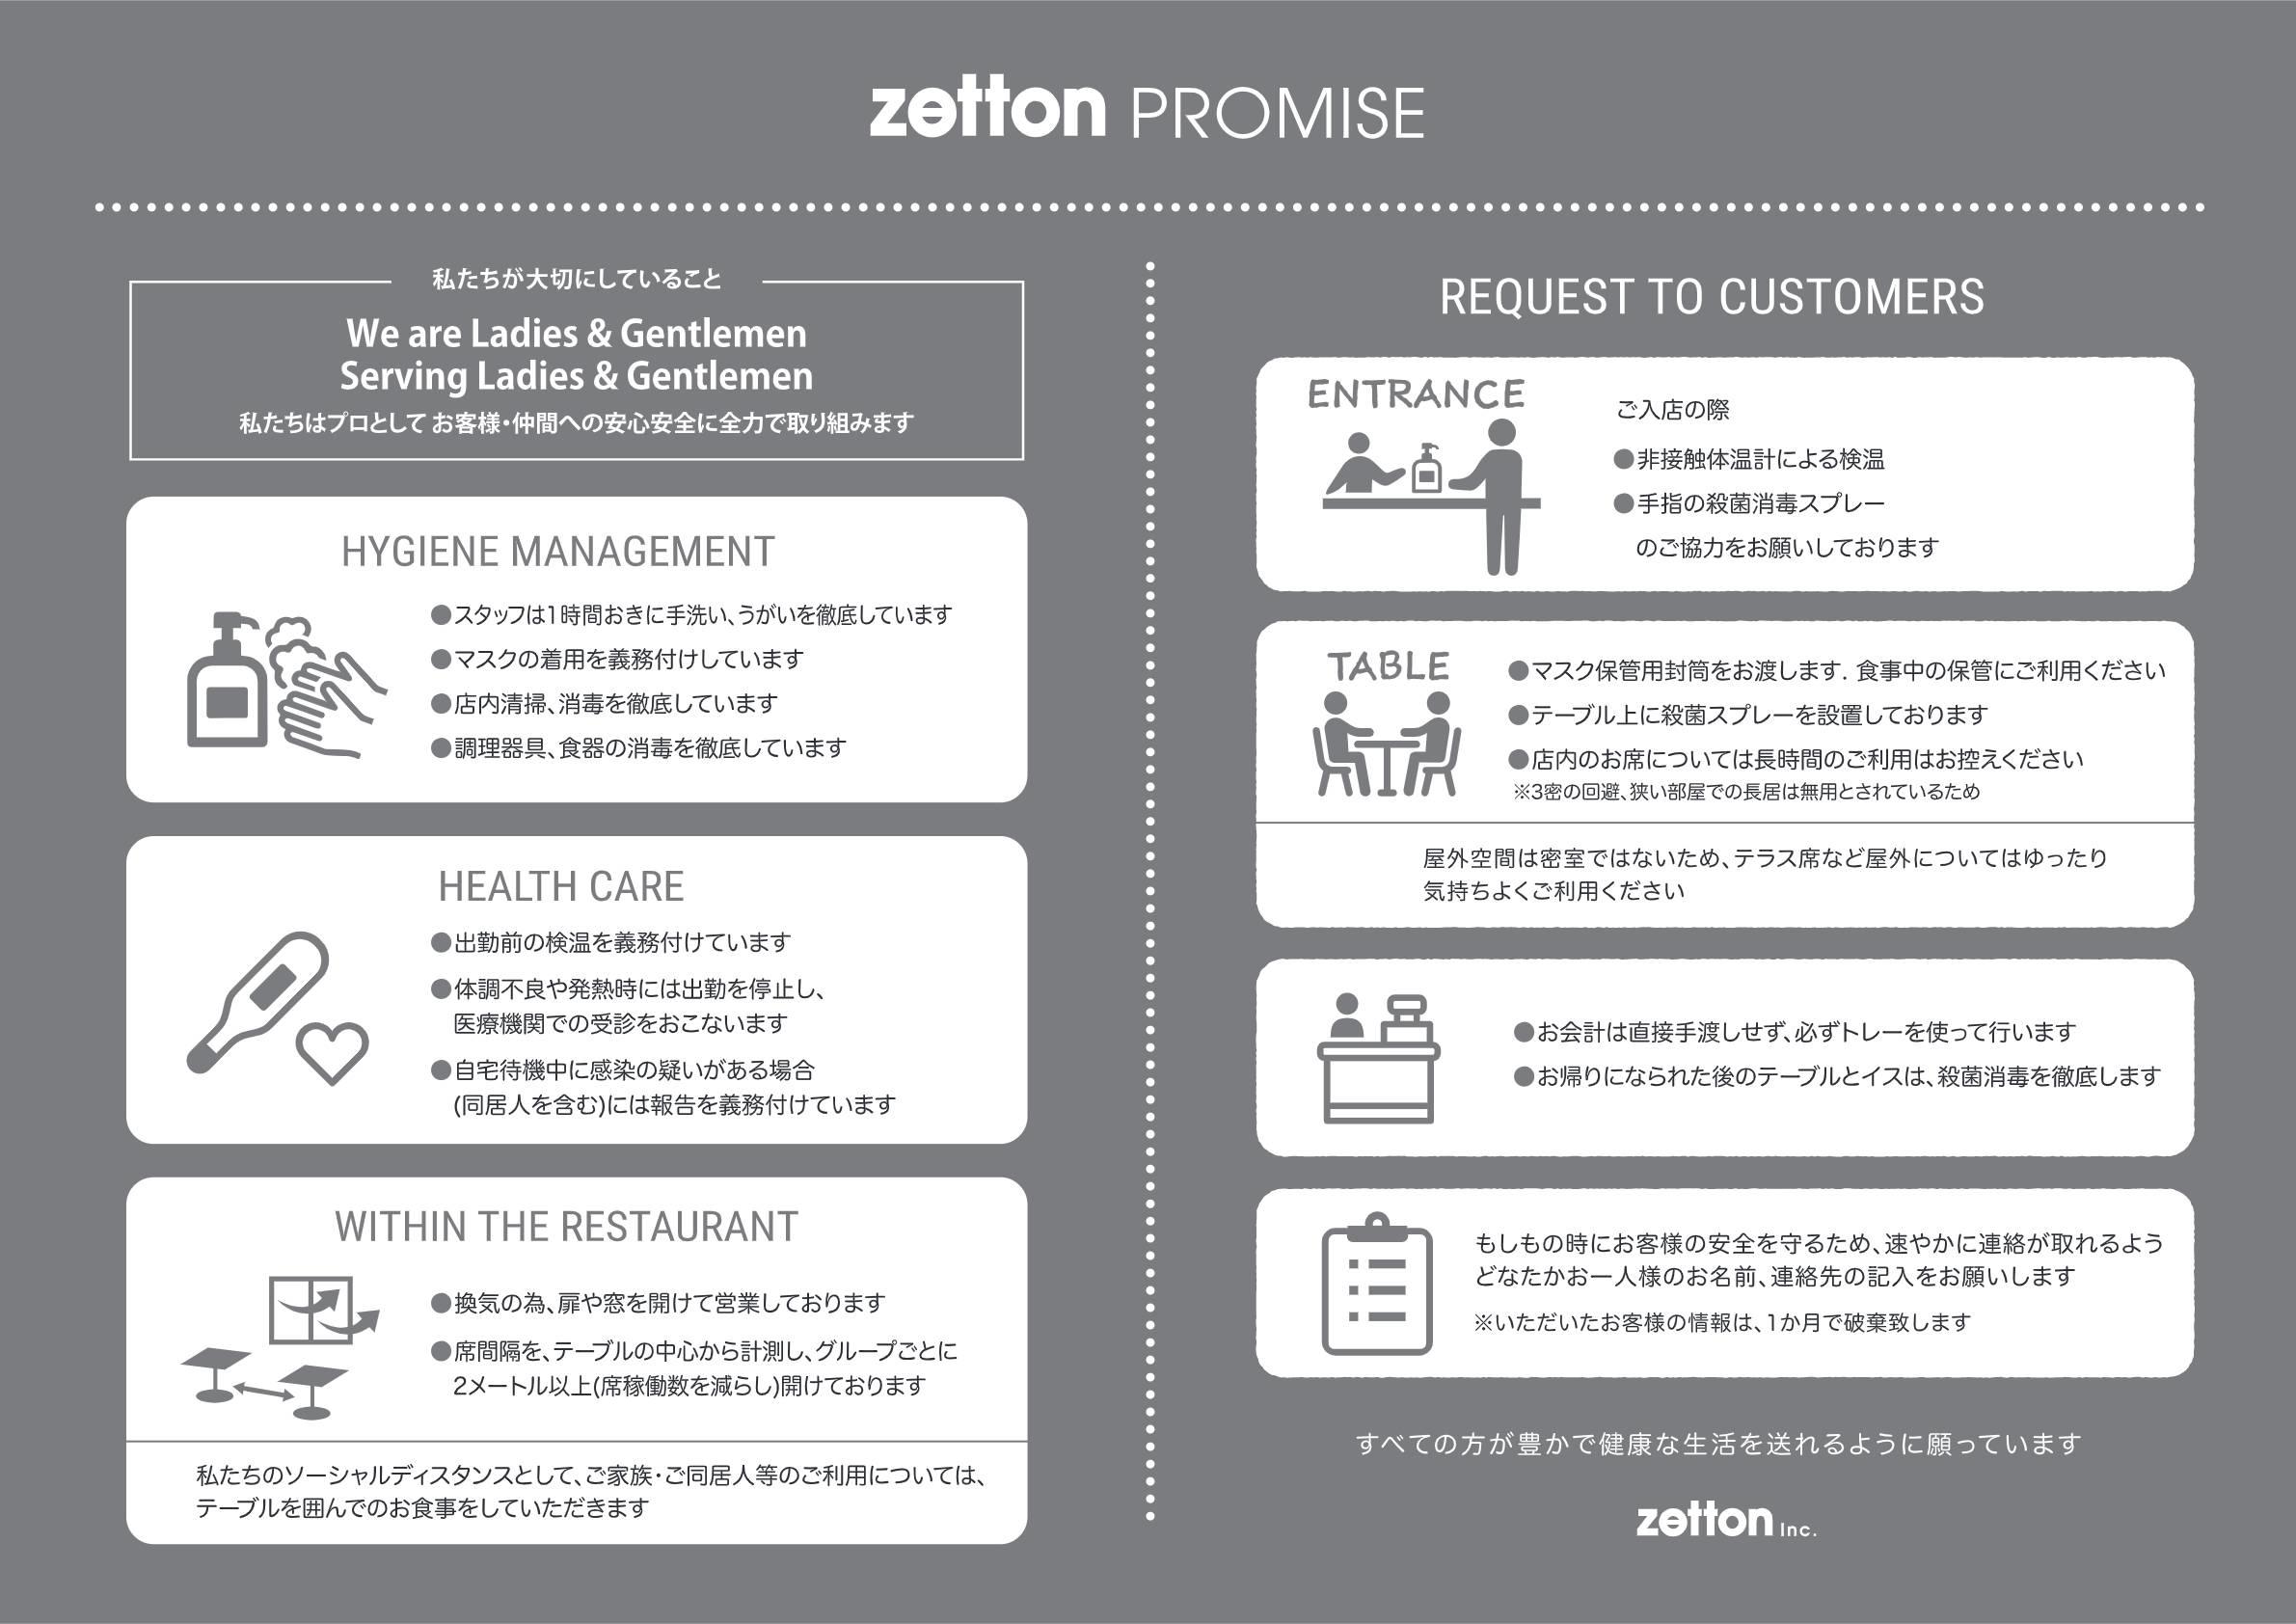 http://www.zetton.co.jp/news/zetton_promise.jpg